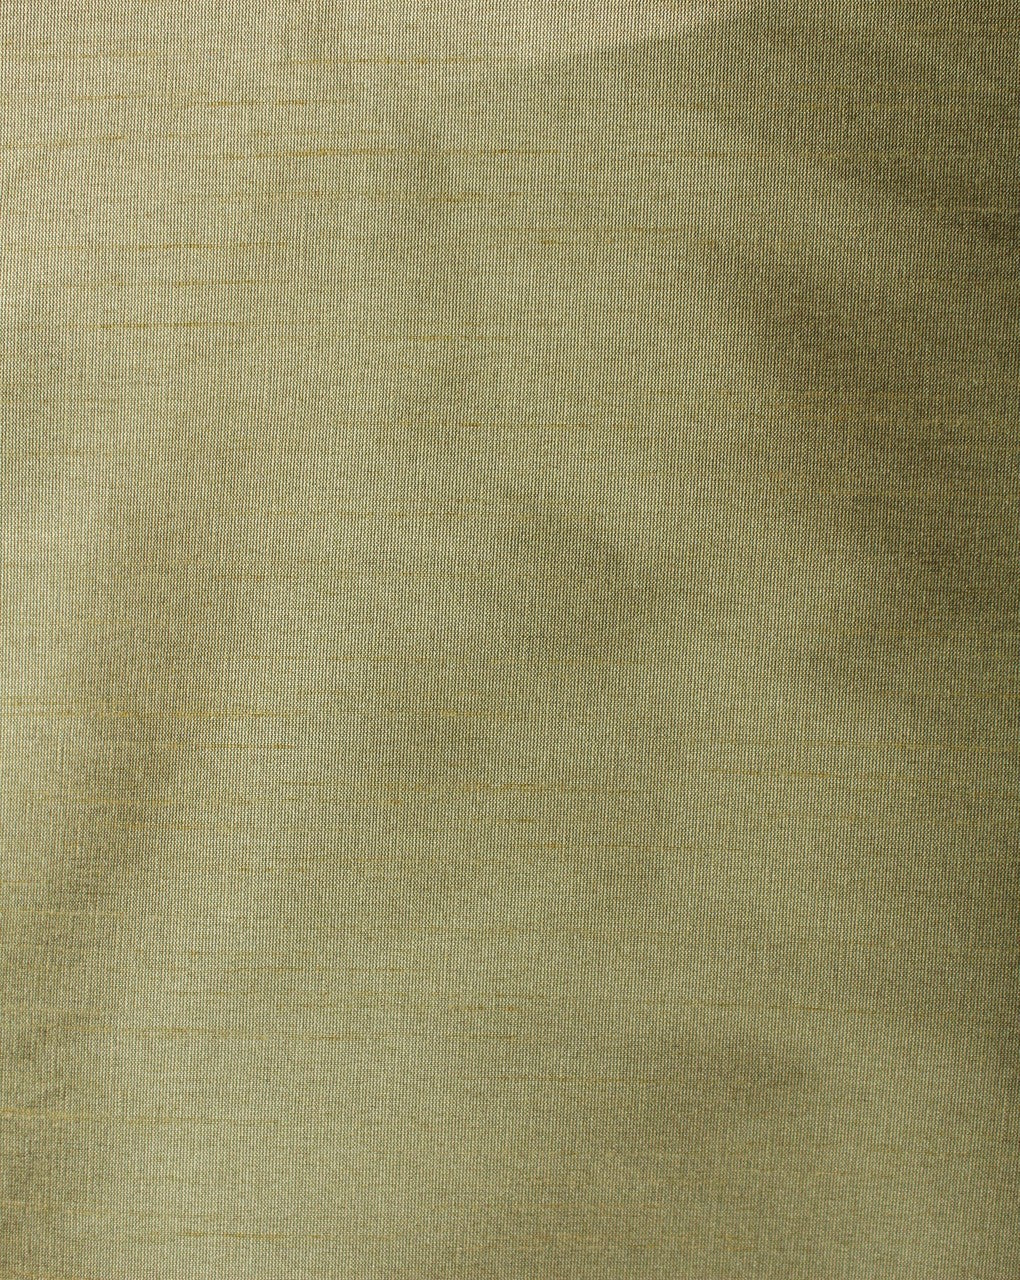 Plain Golden Poly Dupion Fabric